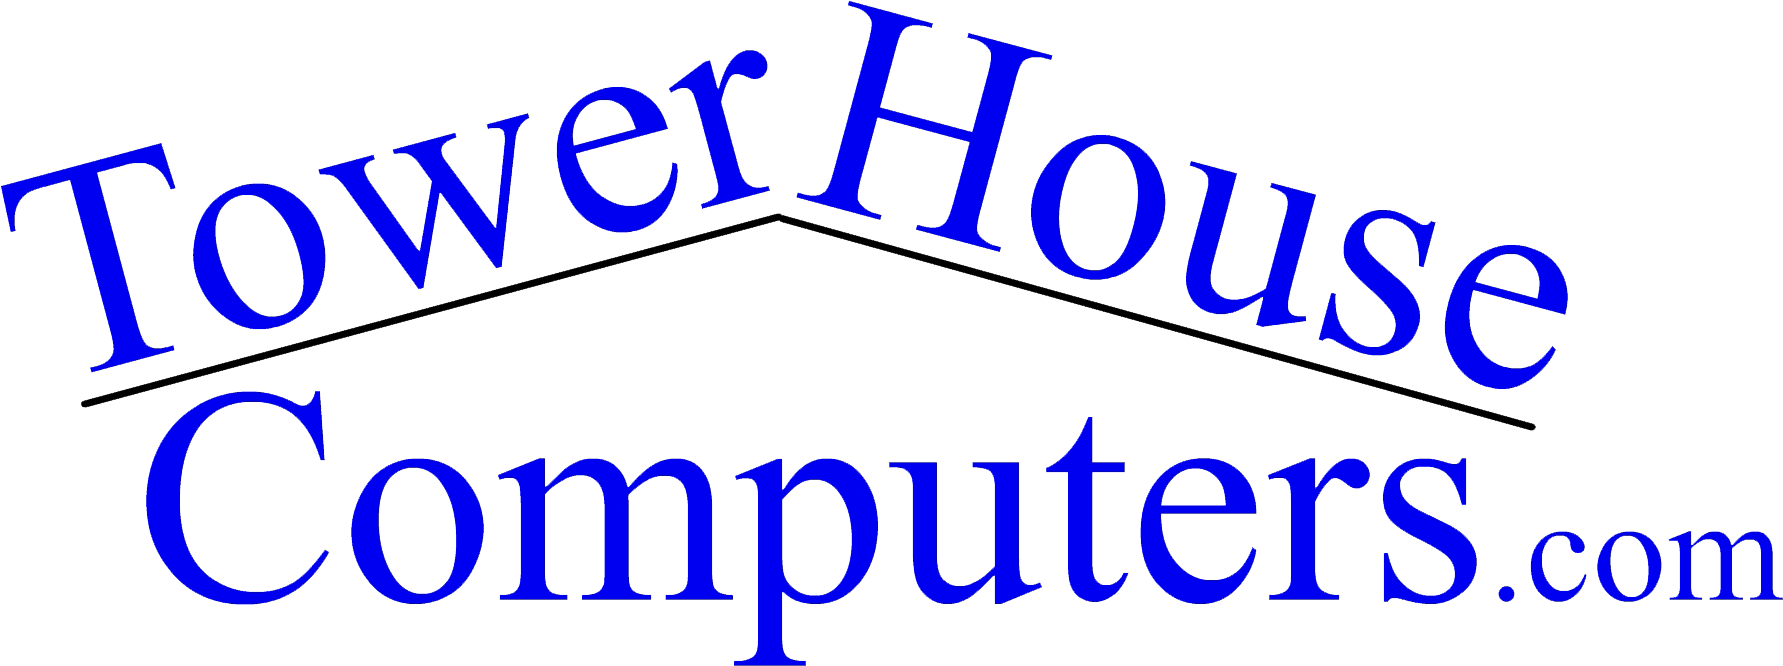 TowerHouse Computers